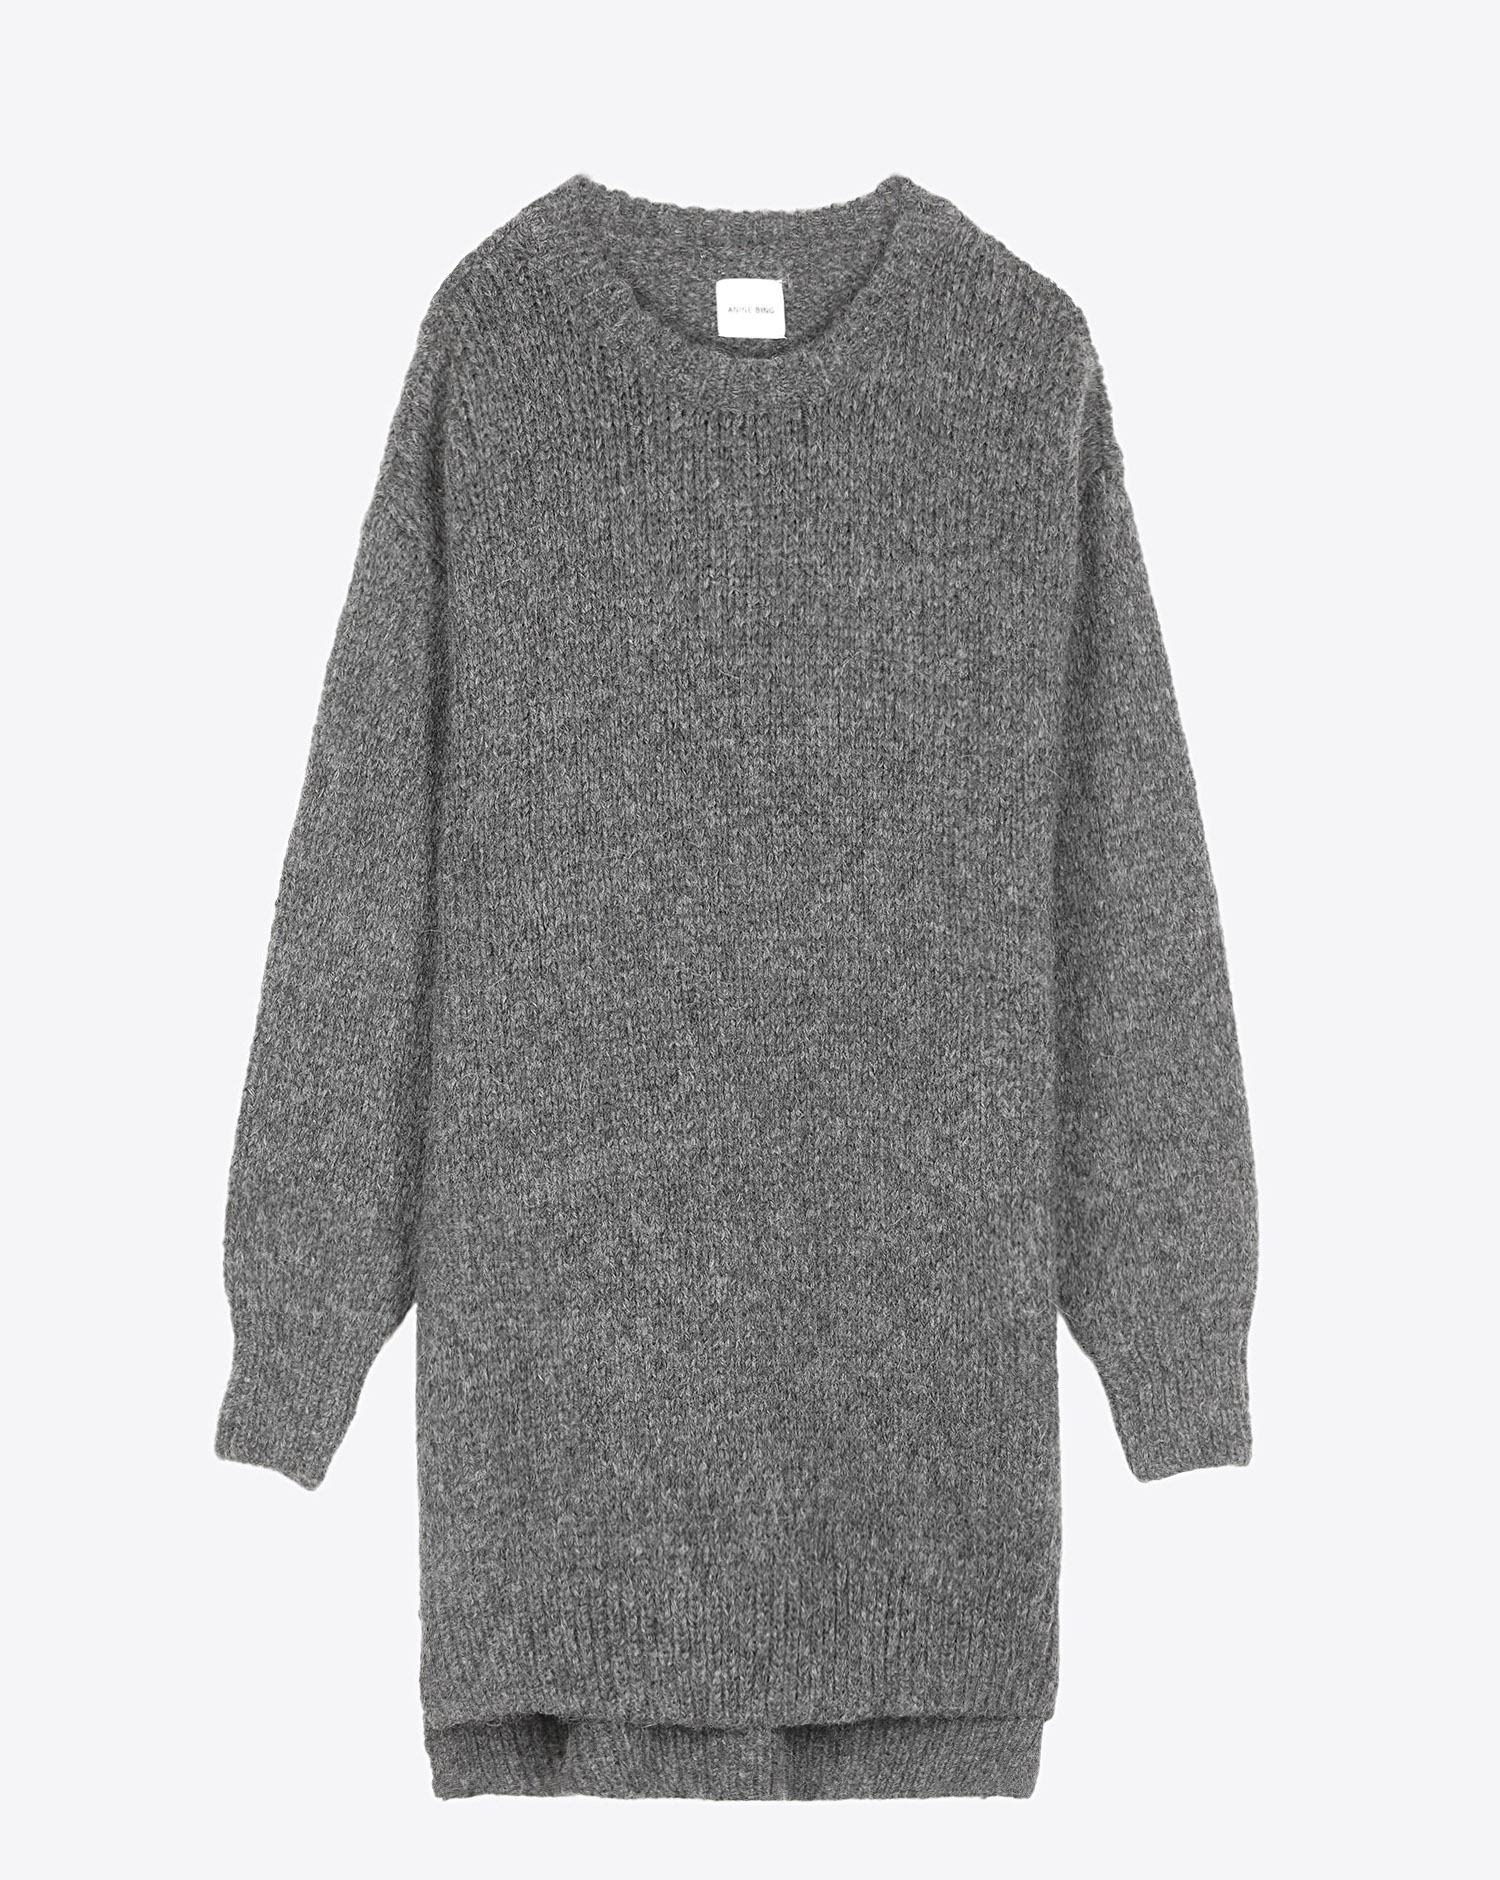 Anine Bing Kyle  Sweater Dress - Grey  